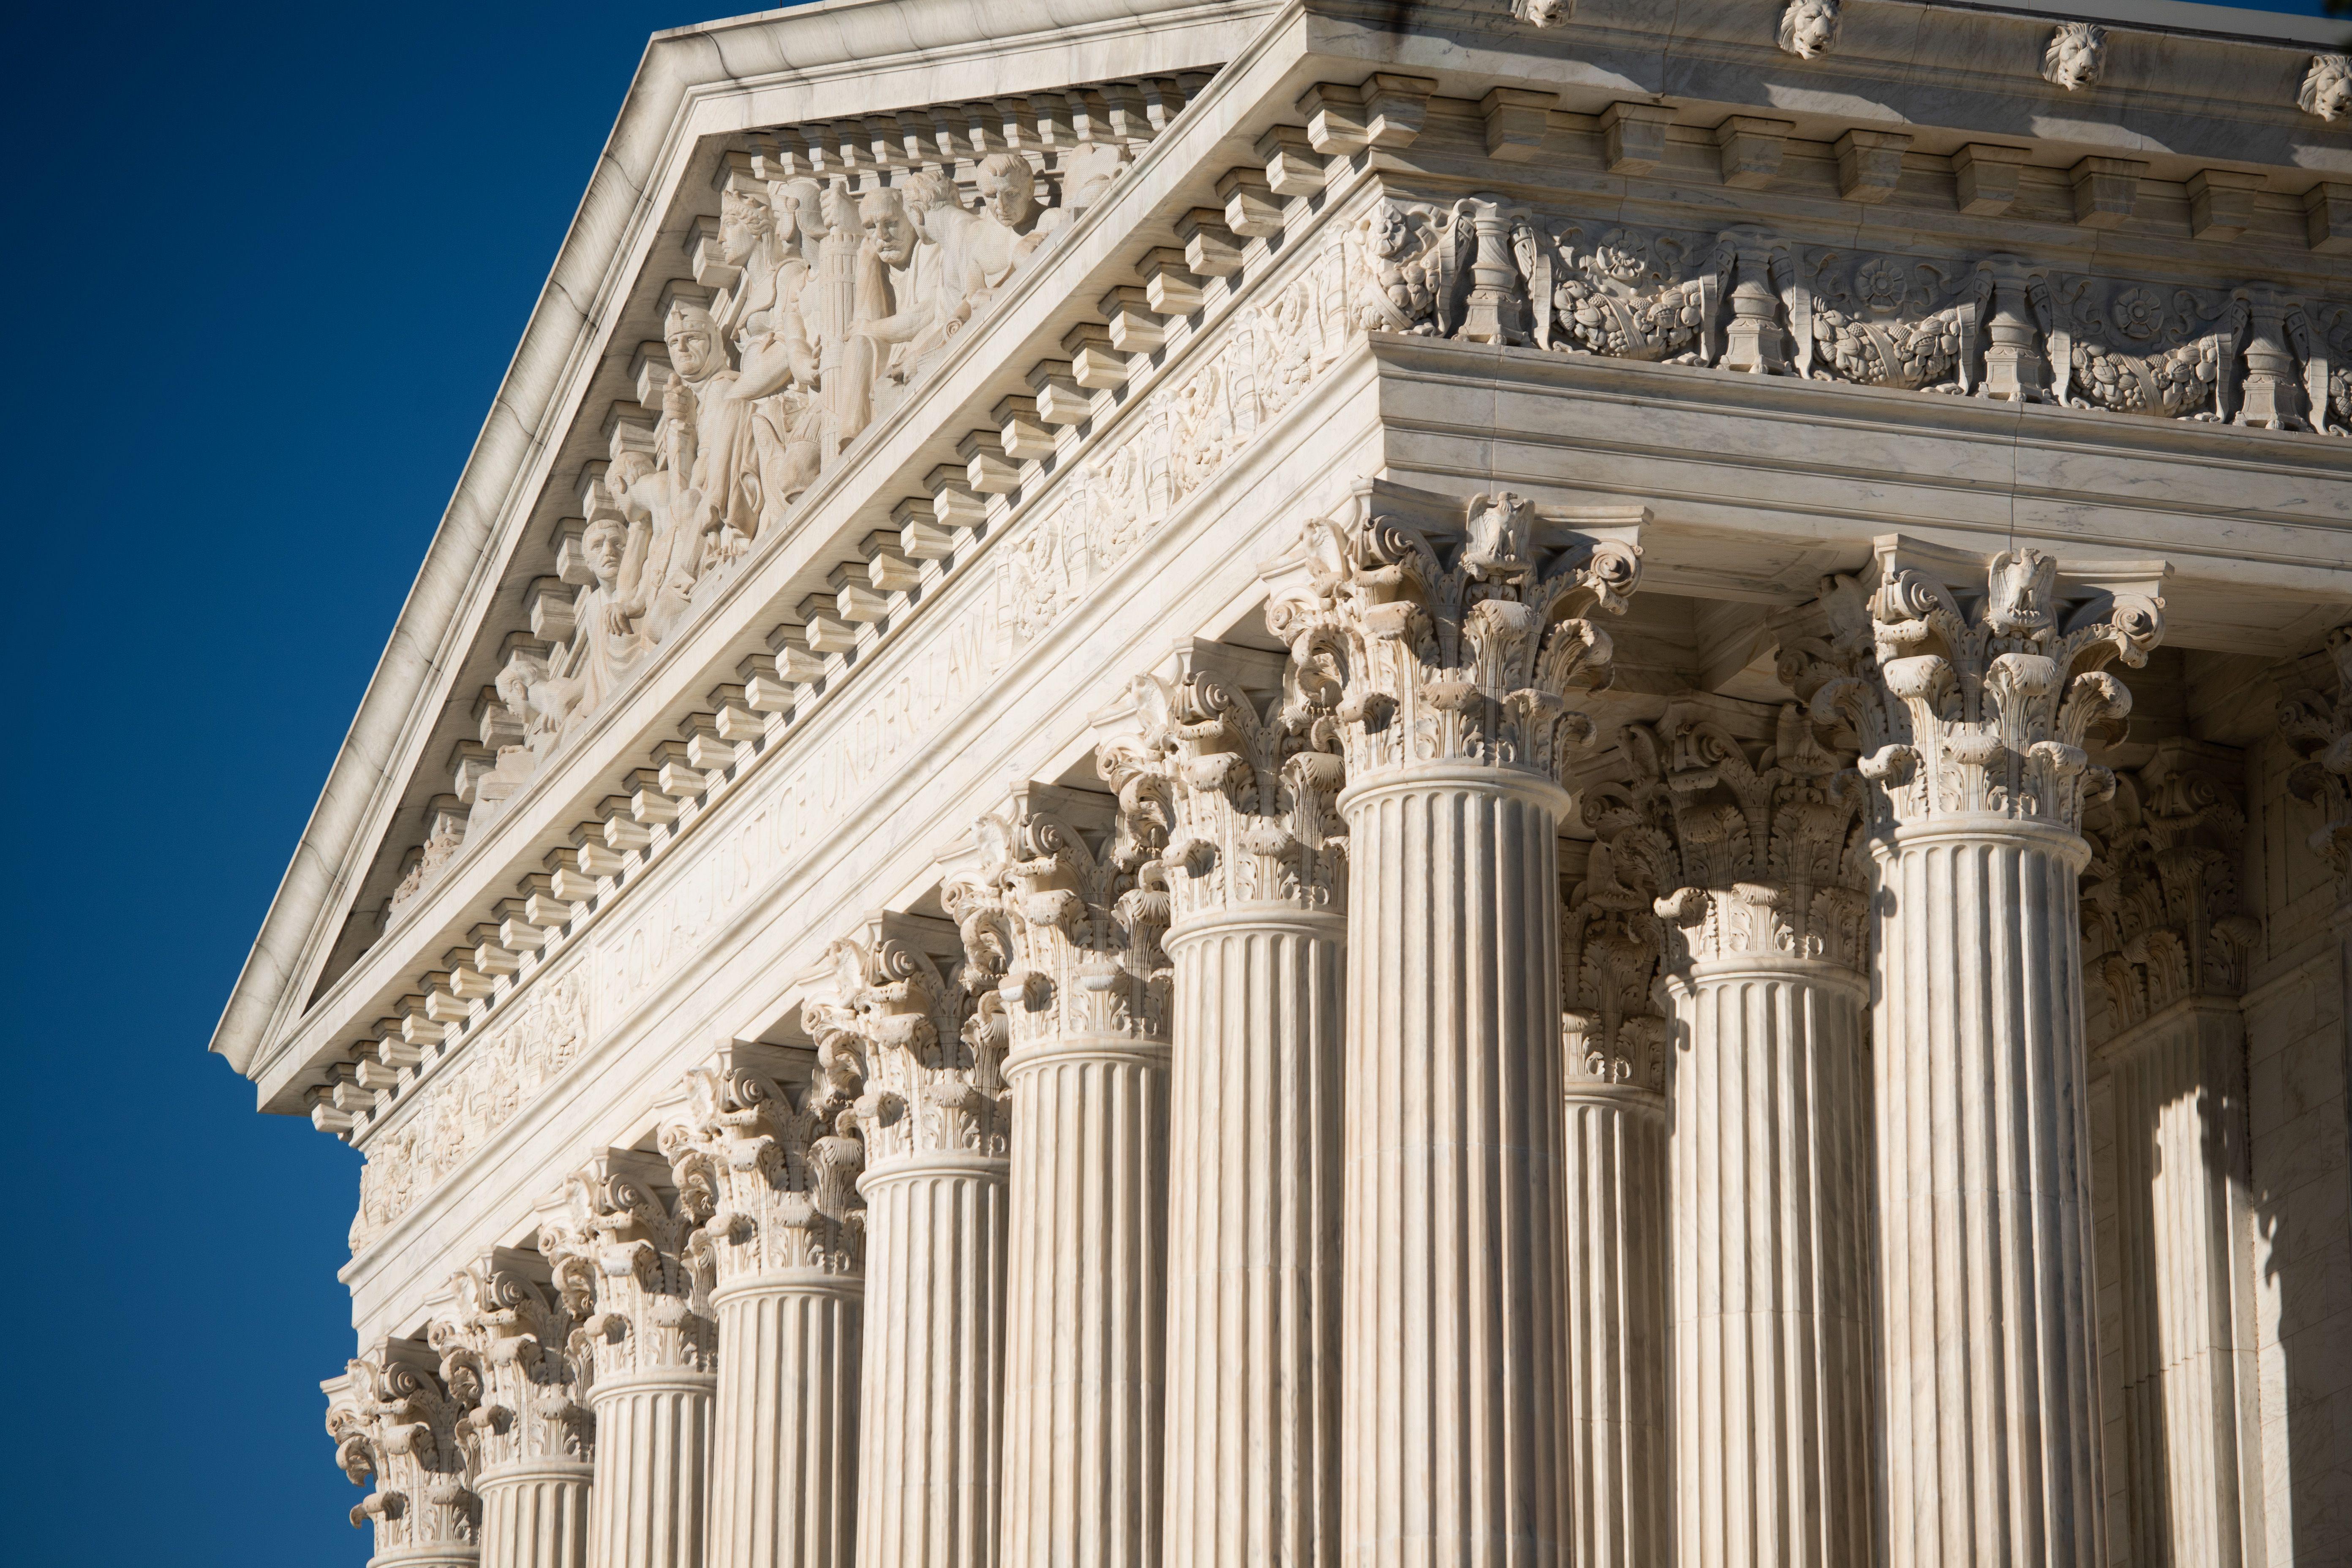 The U.S. Supreme Court façade